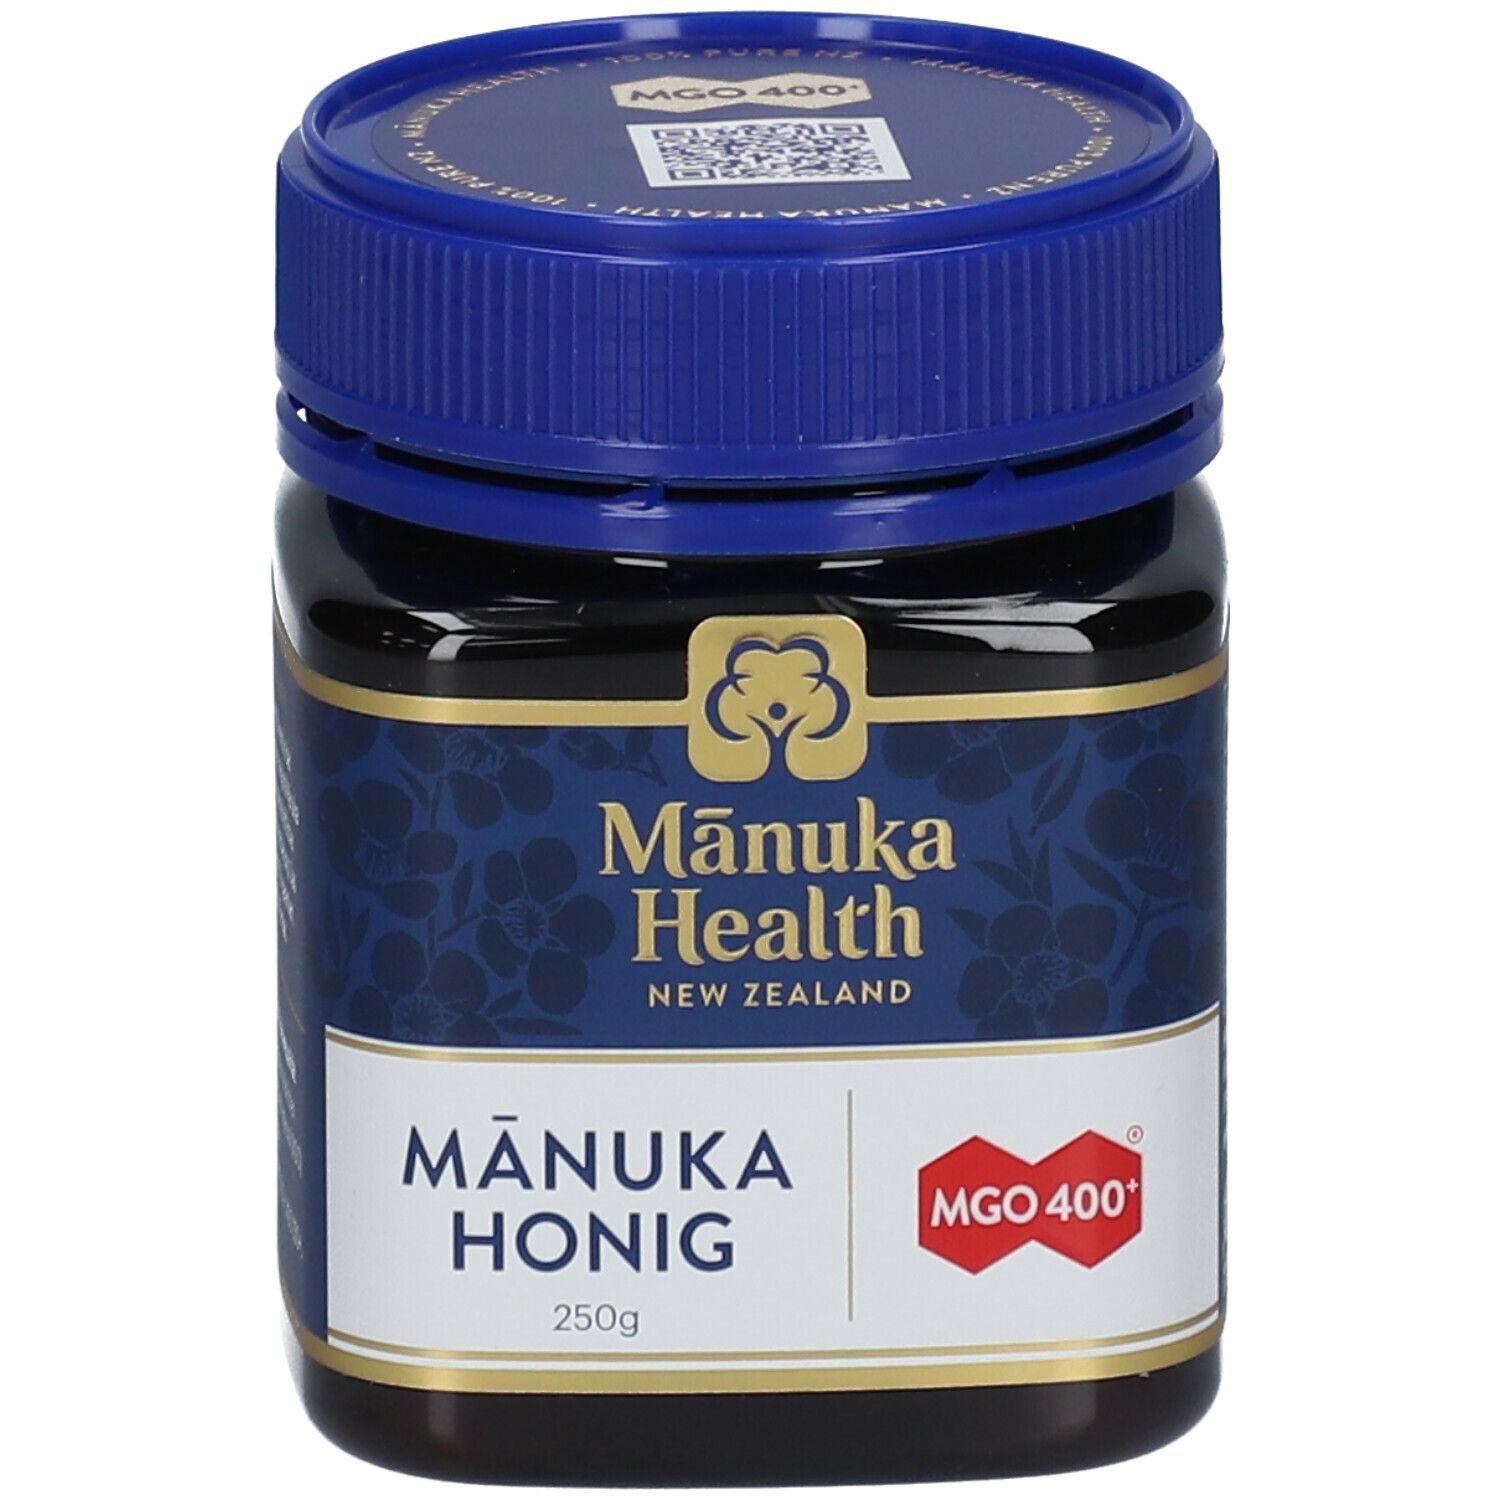 MANUKA HEALTH MGO 400+ Manuka Miel